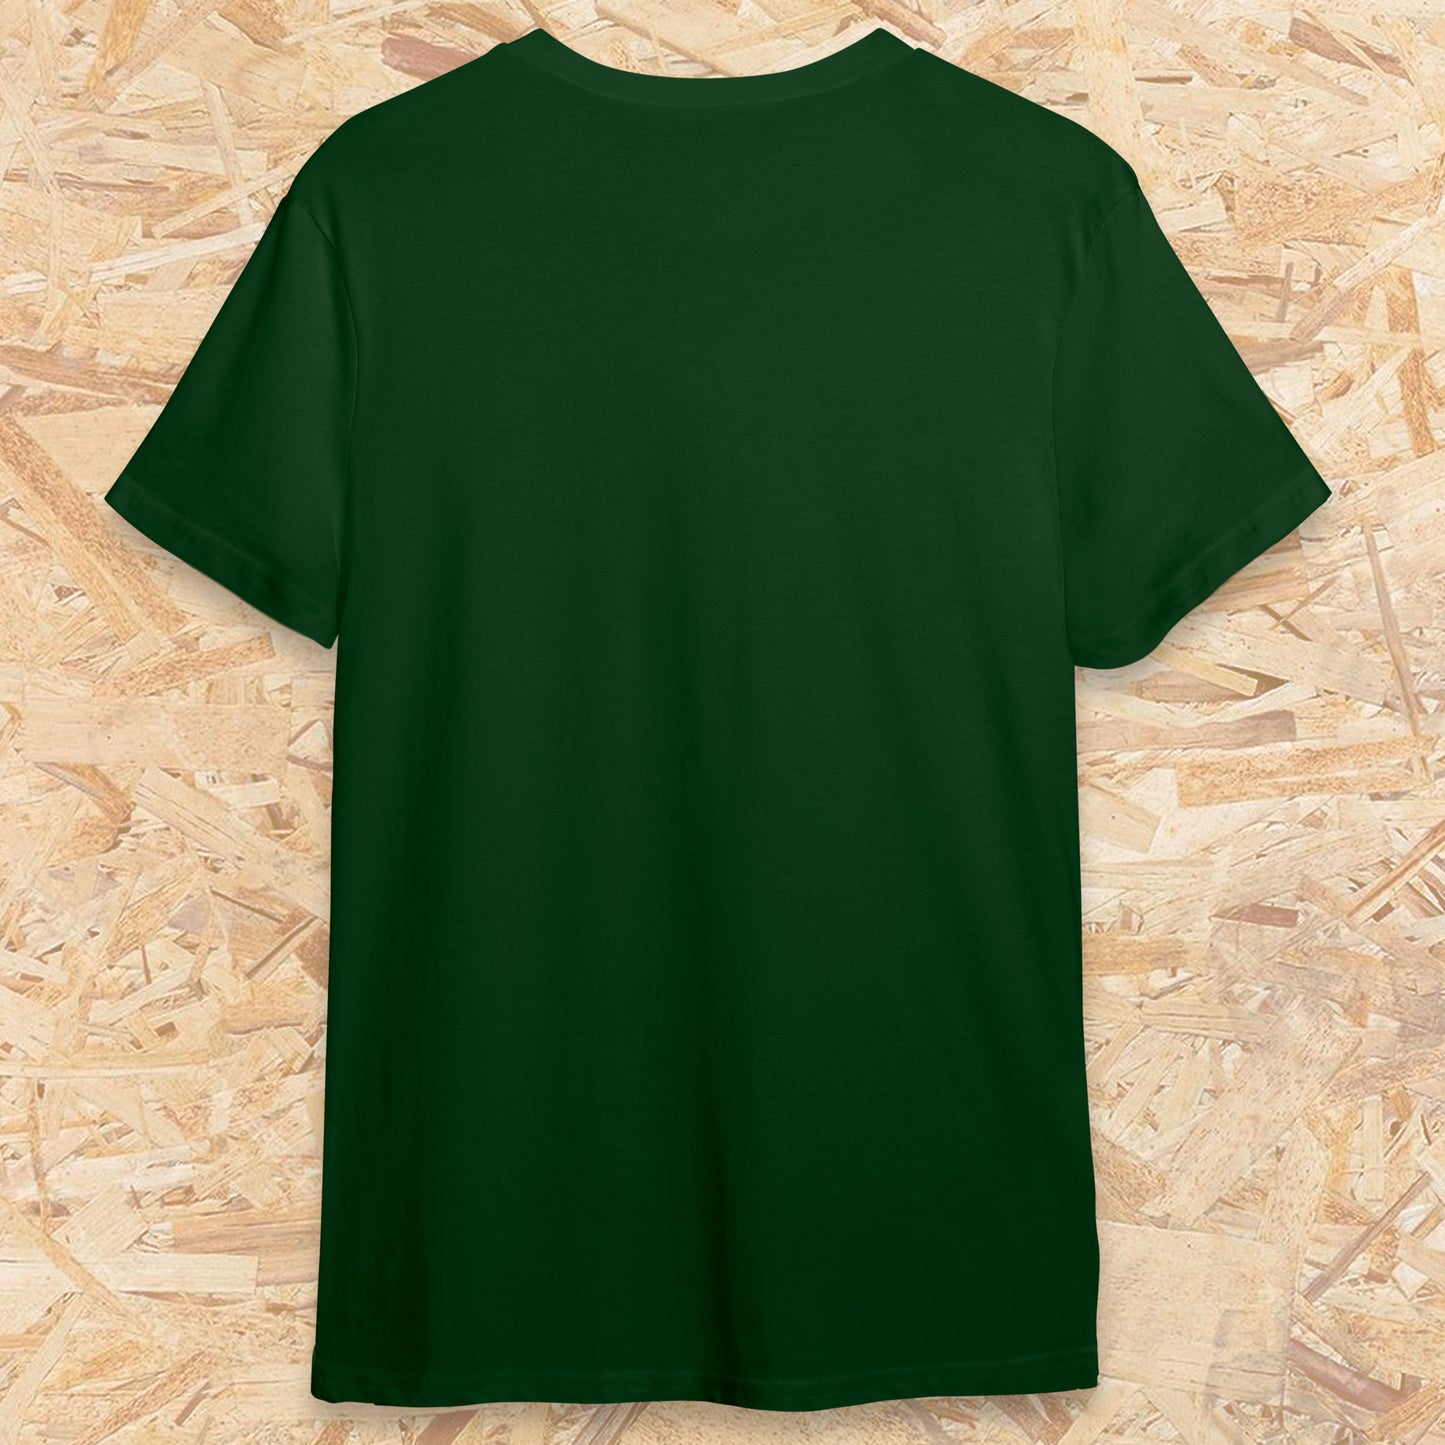 DOOM T-Shirt - Green